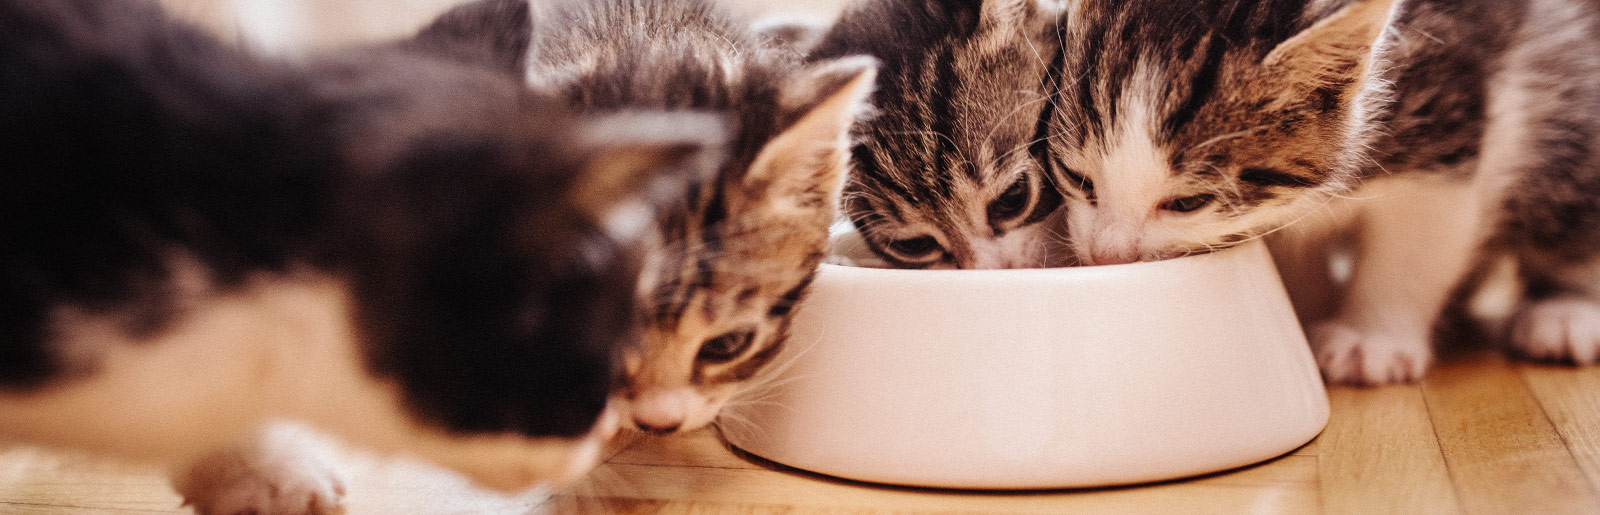 Die richtige Menge an Katzenfutter füttern